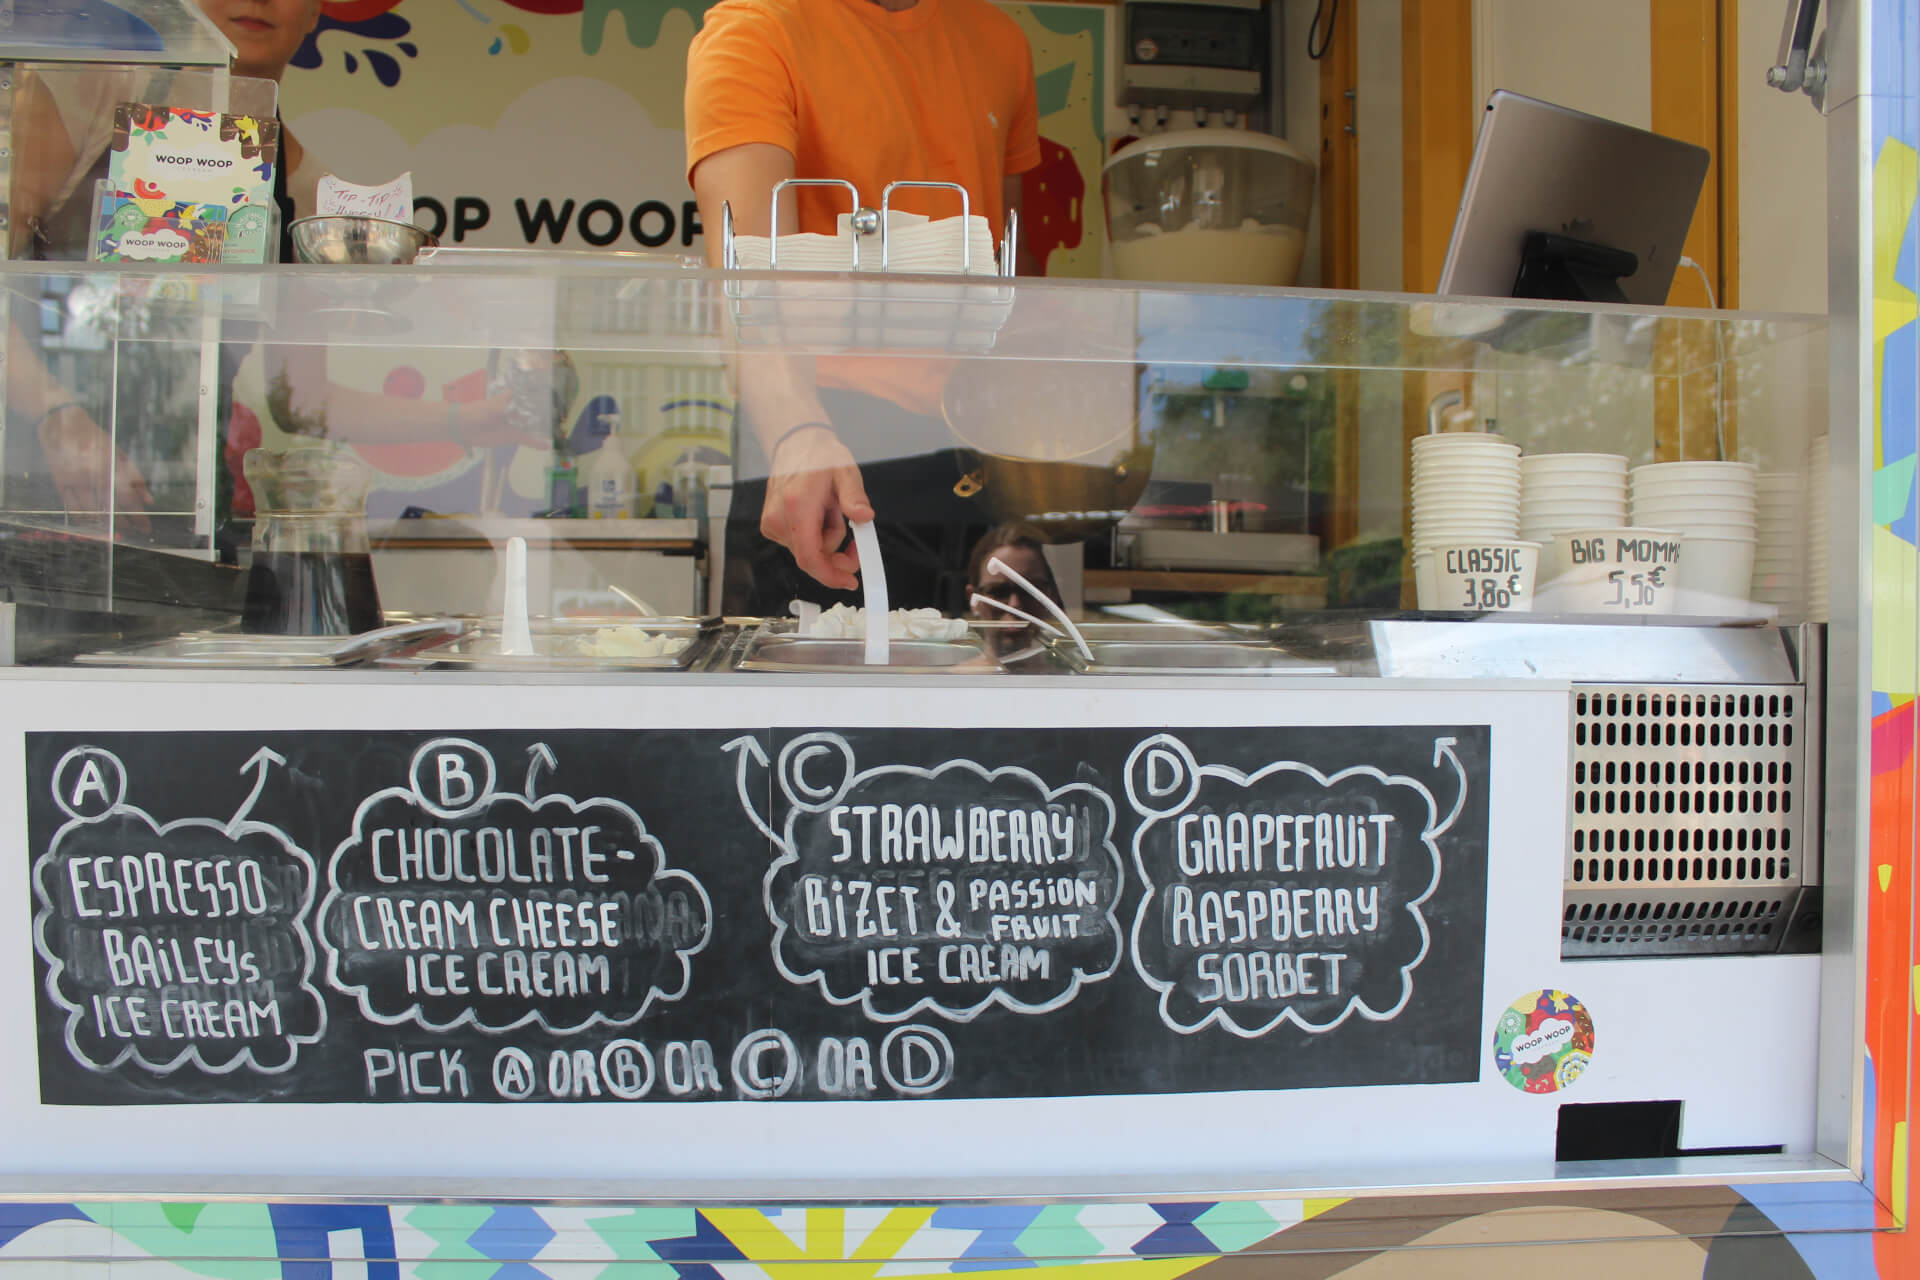 Besondere Eisdielen in Berlin: Woop Woop Ice Cream Truck